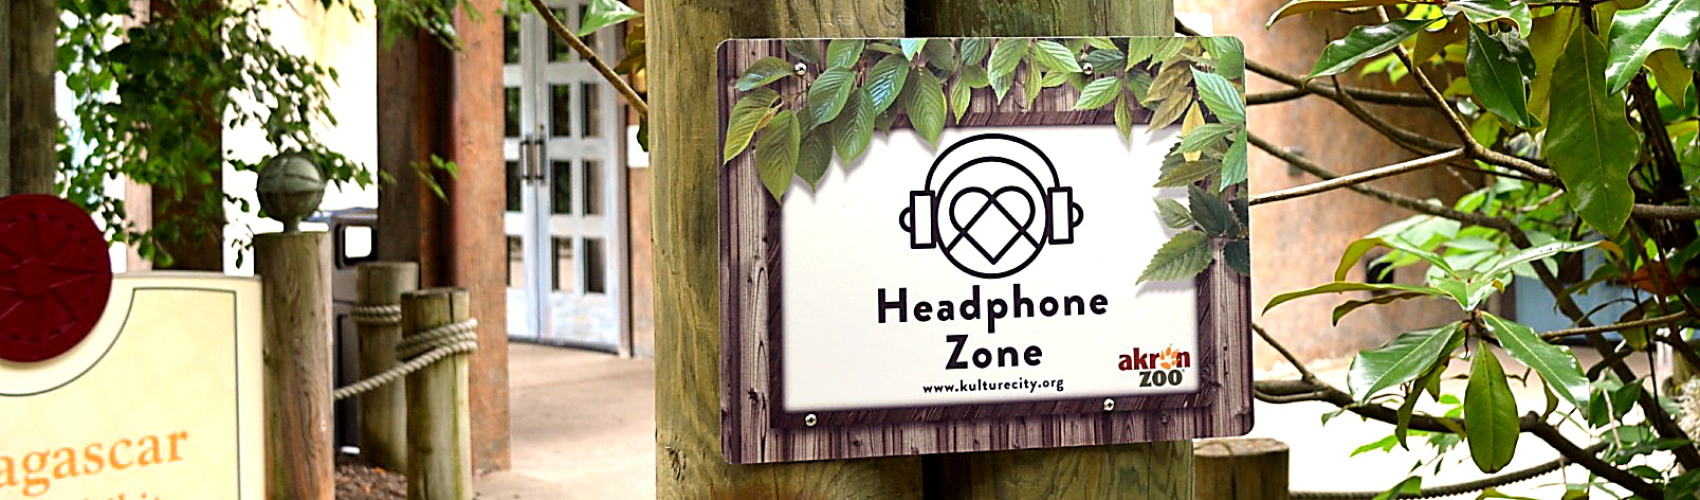 Headphone zone signs